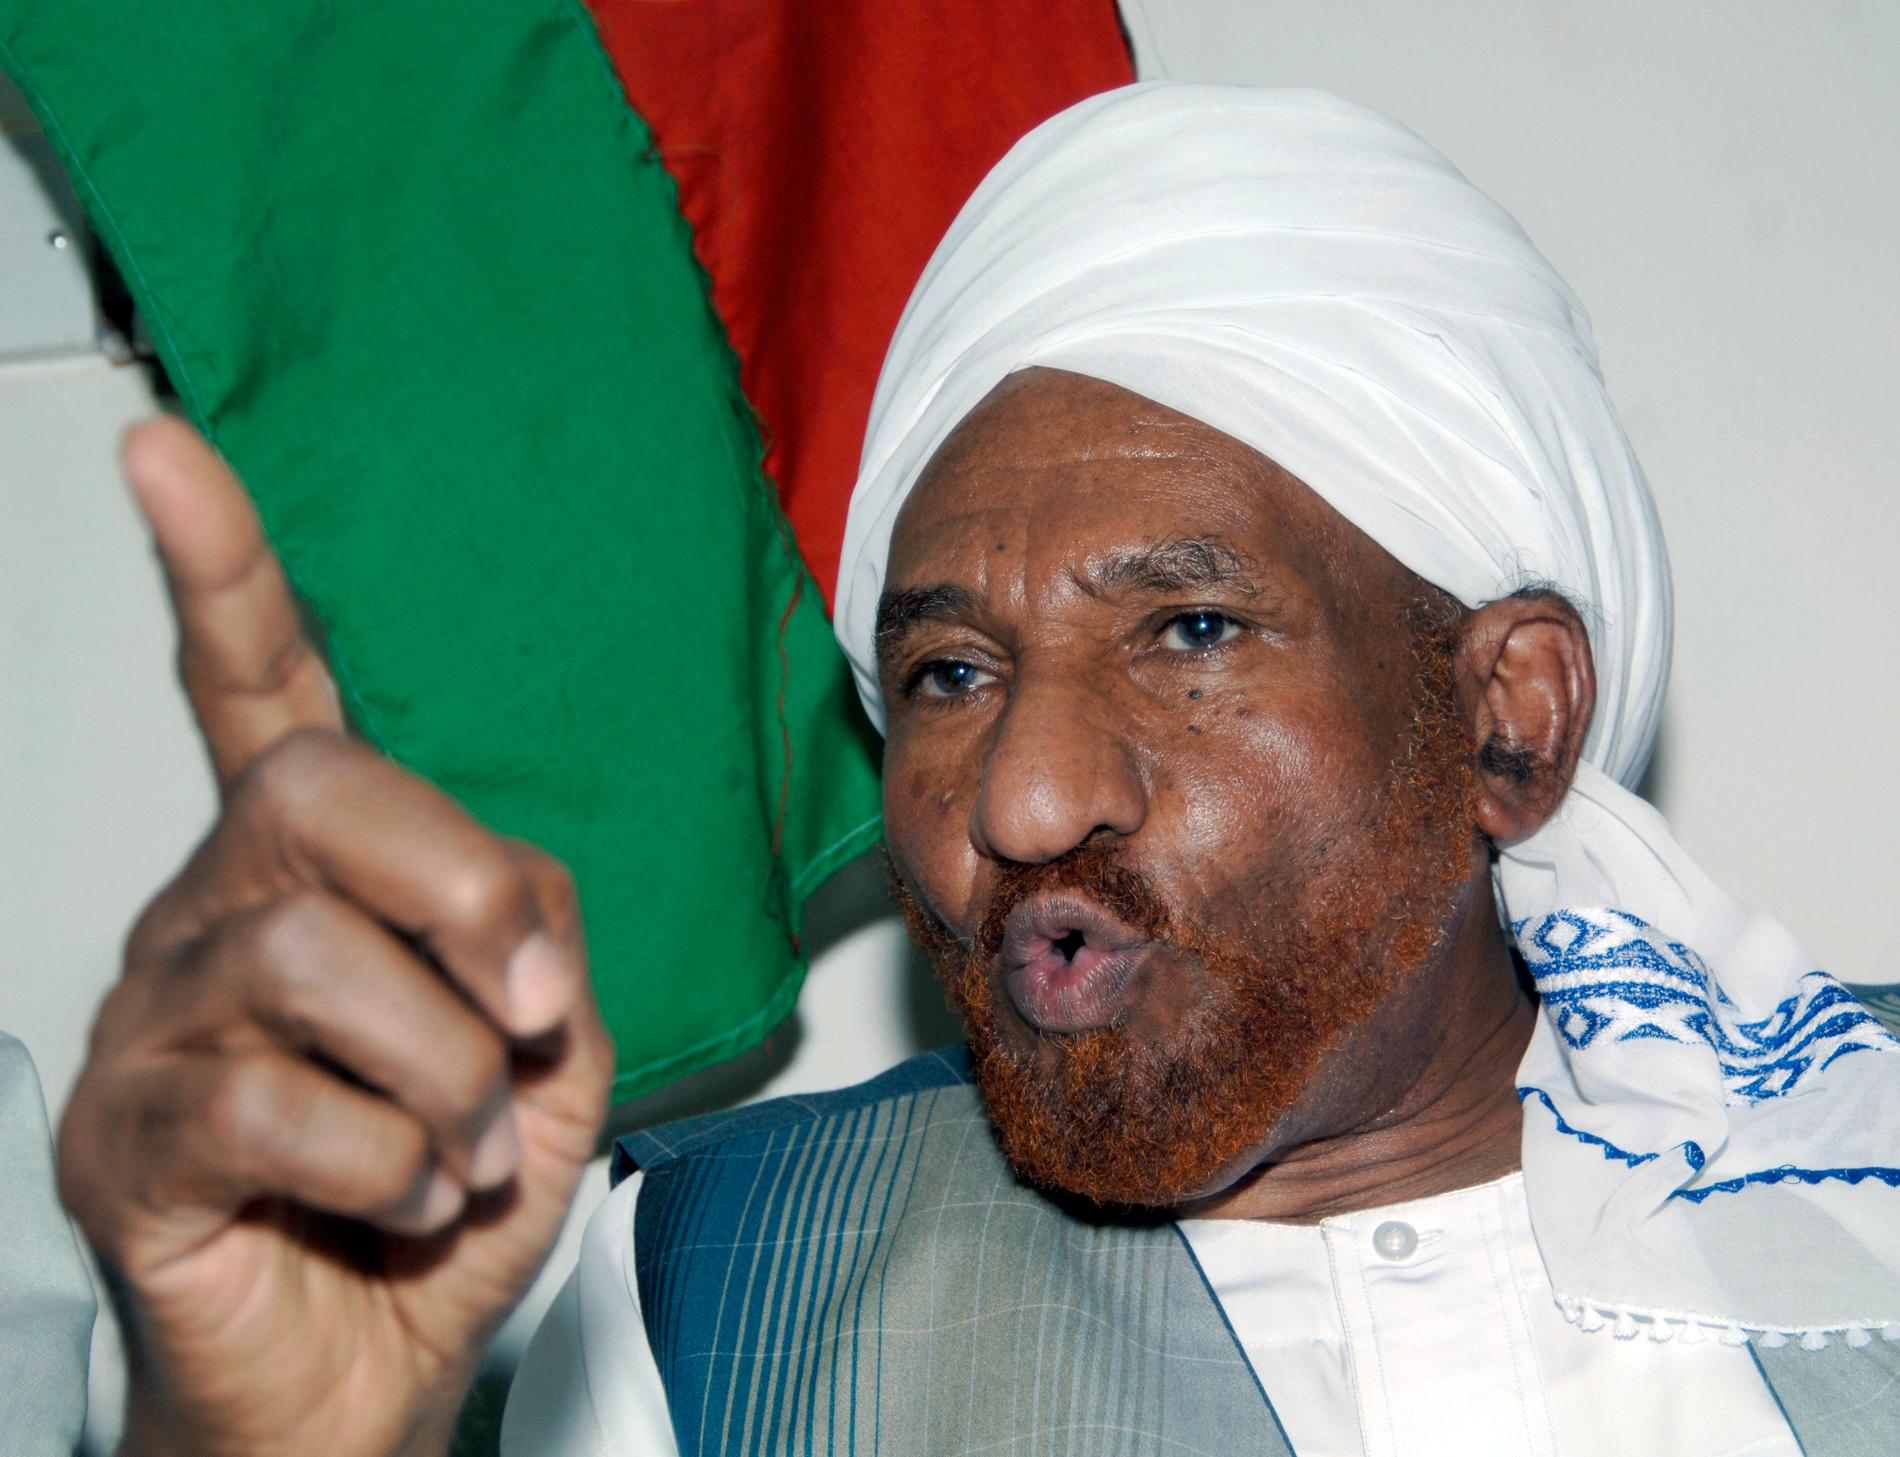 Sadiq al-Mahdi, tidigare premiärminister i Sudan, har avlidit i sviterna av covid-19. Arkivbild.